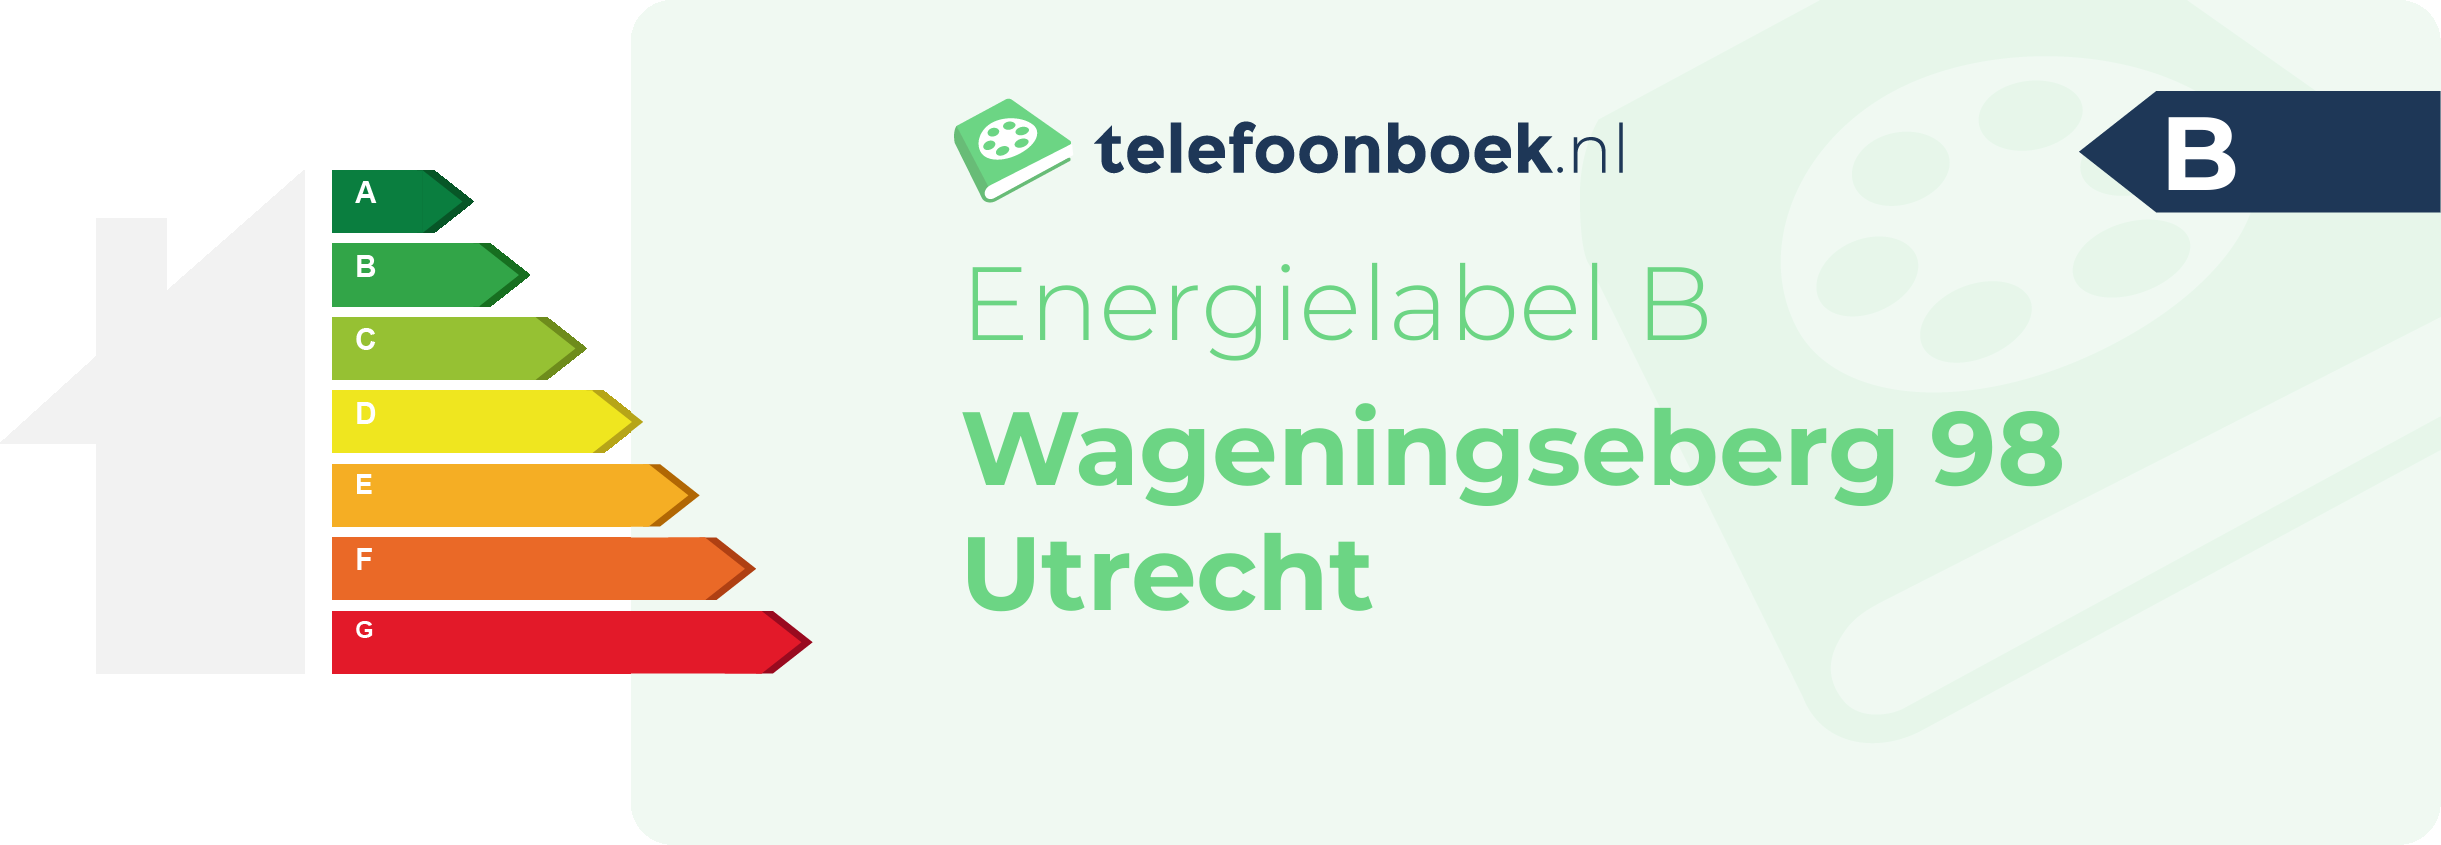 Energielabel Wageningseberg 98 Utrecht